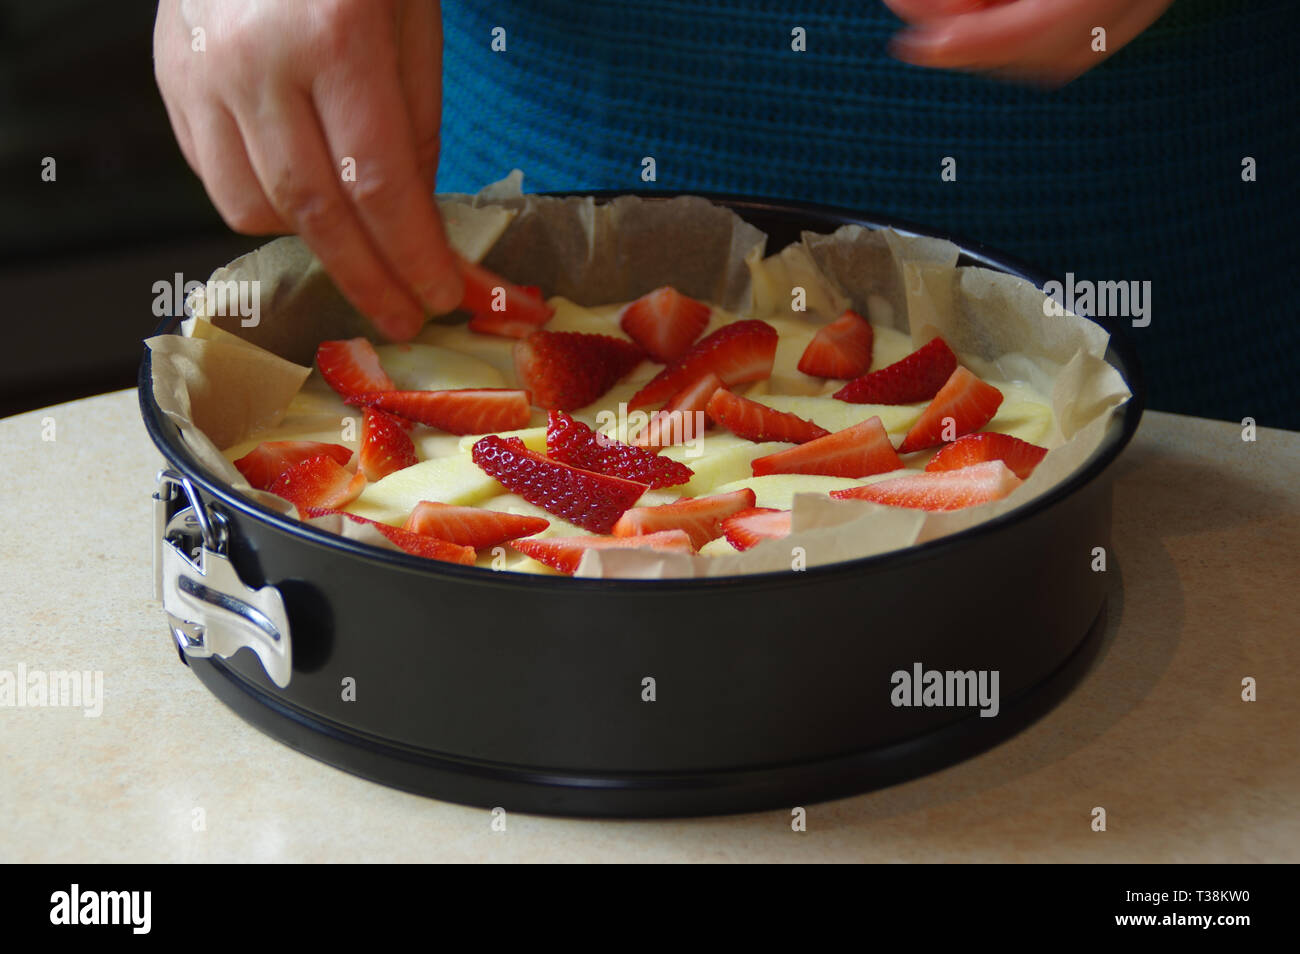 Preparing yeast cake with apple and strawberry to baking. Fresh raw homemade fruit pastry. Stock Photo